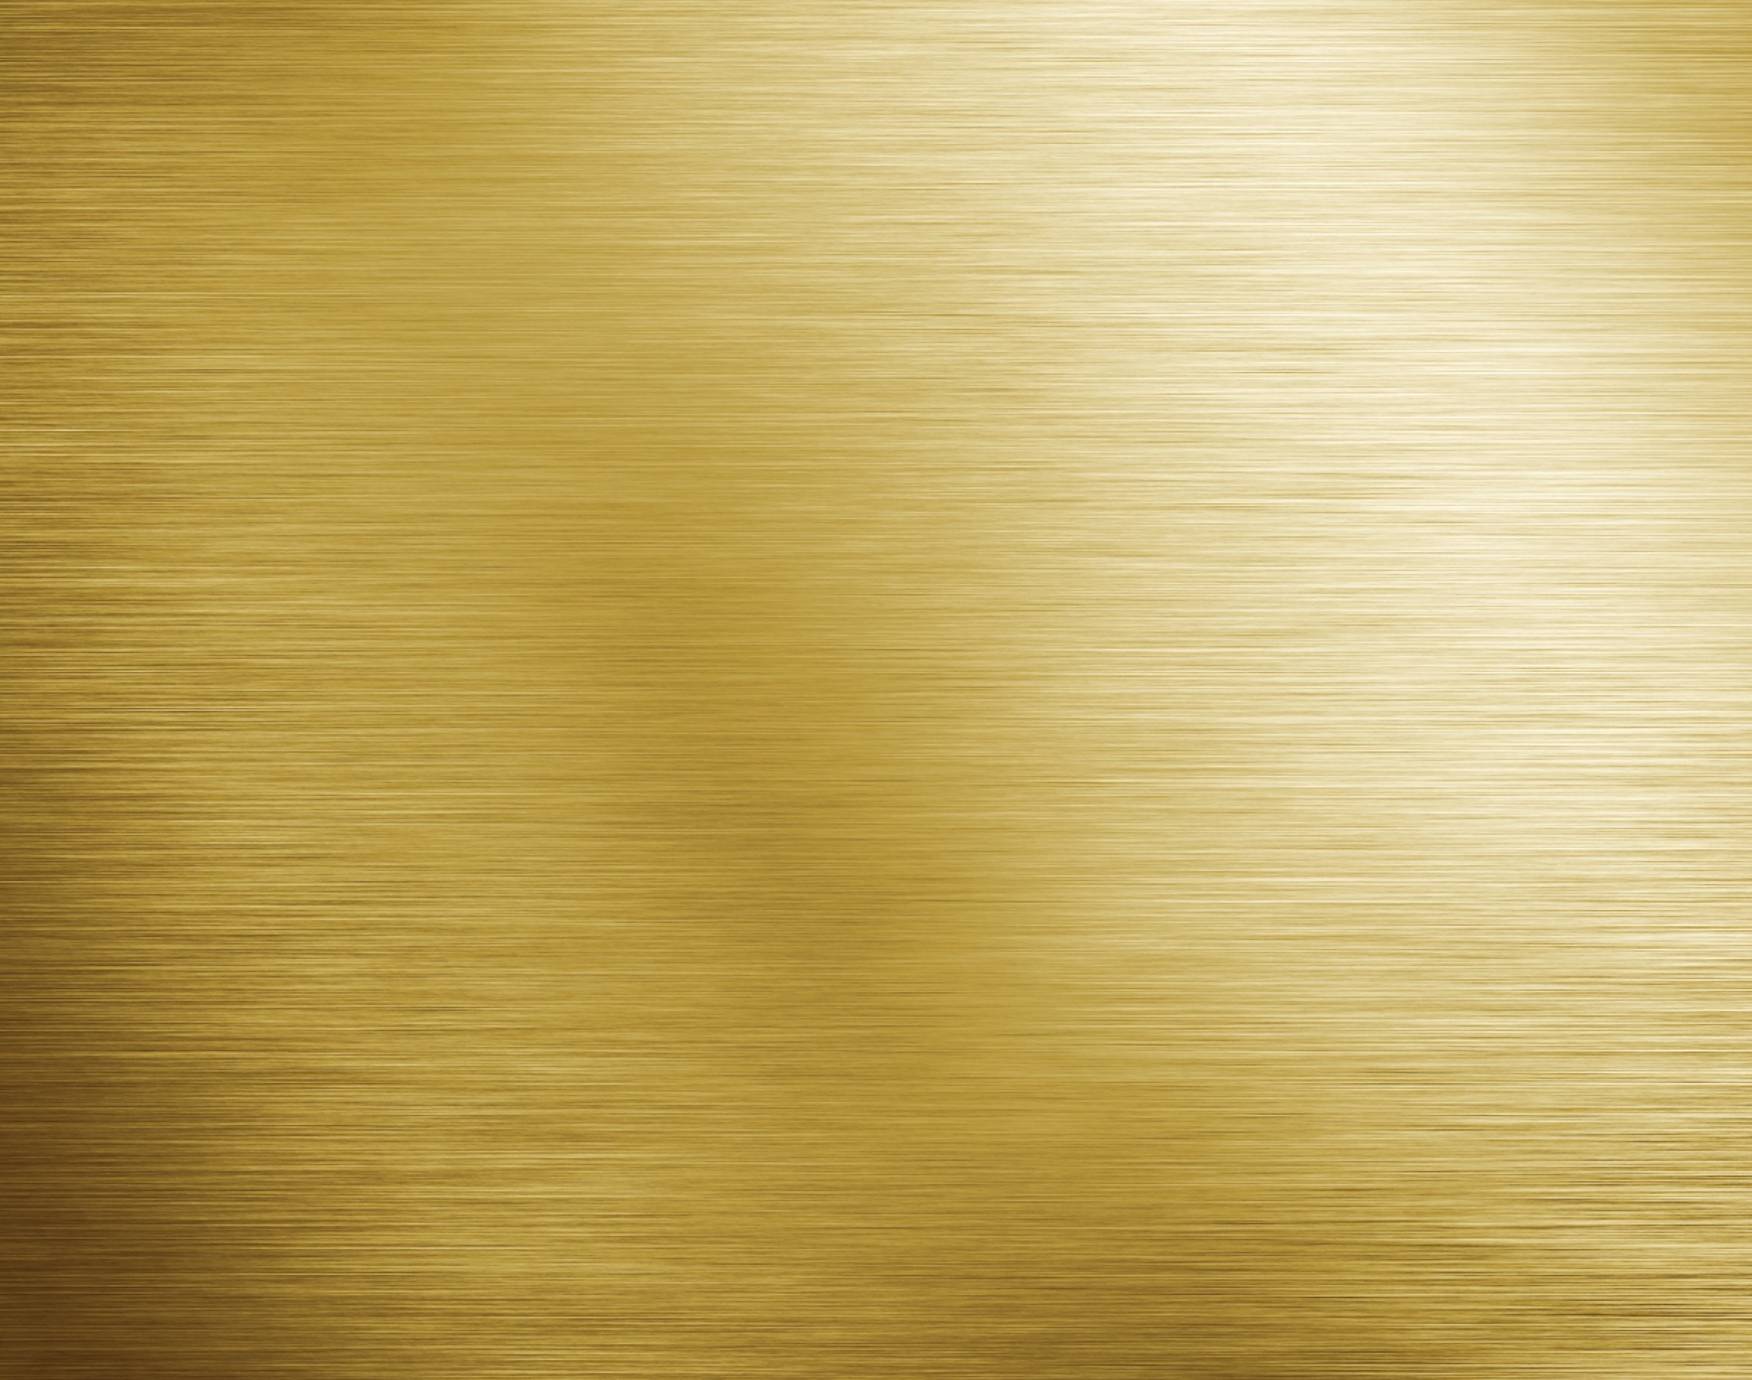 Shiny Gold Background 2 The Stiletto Fits